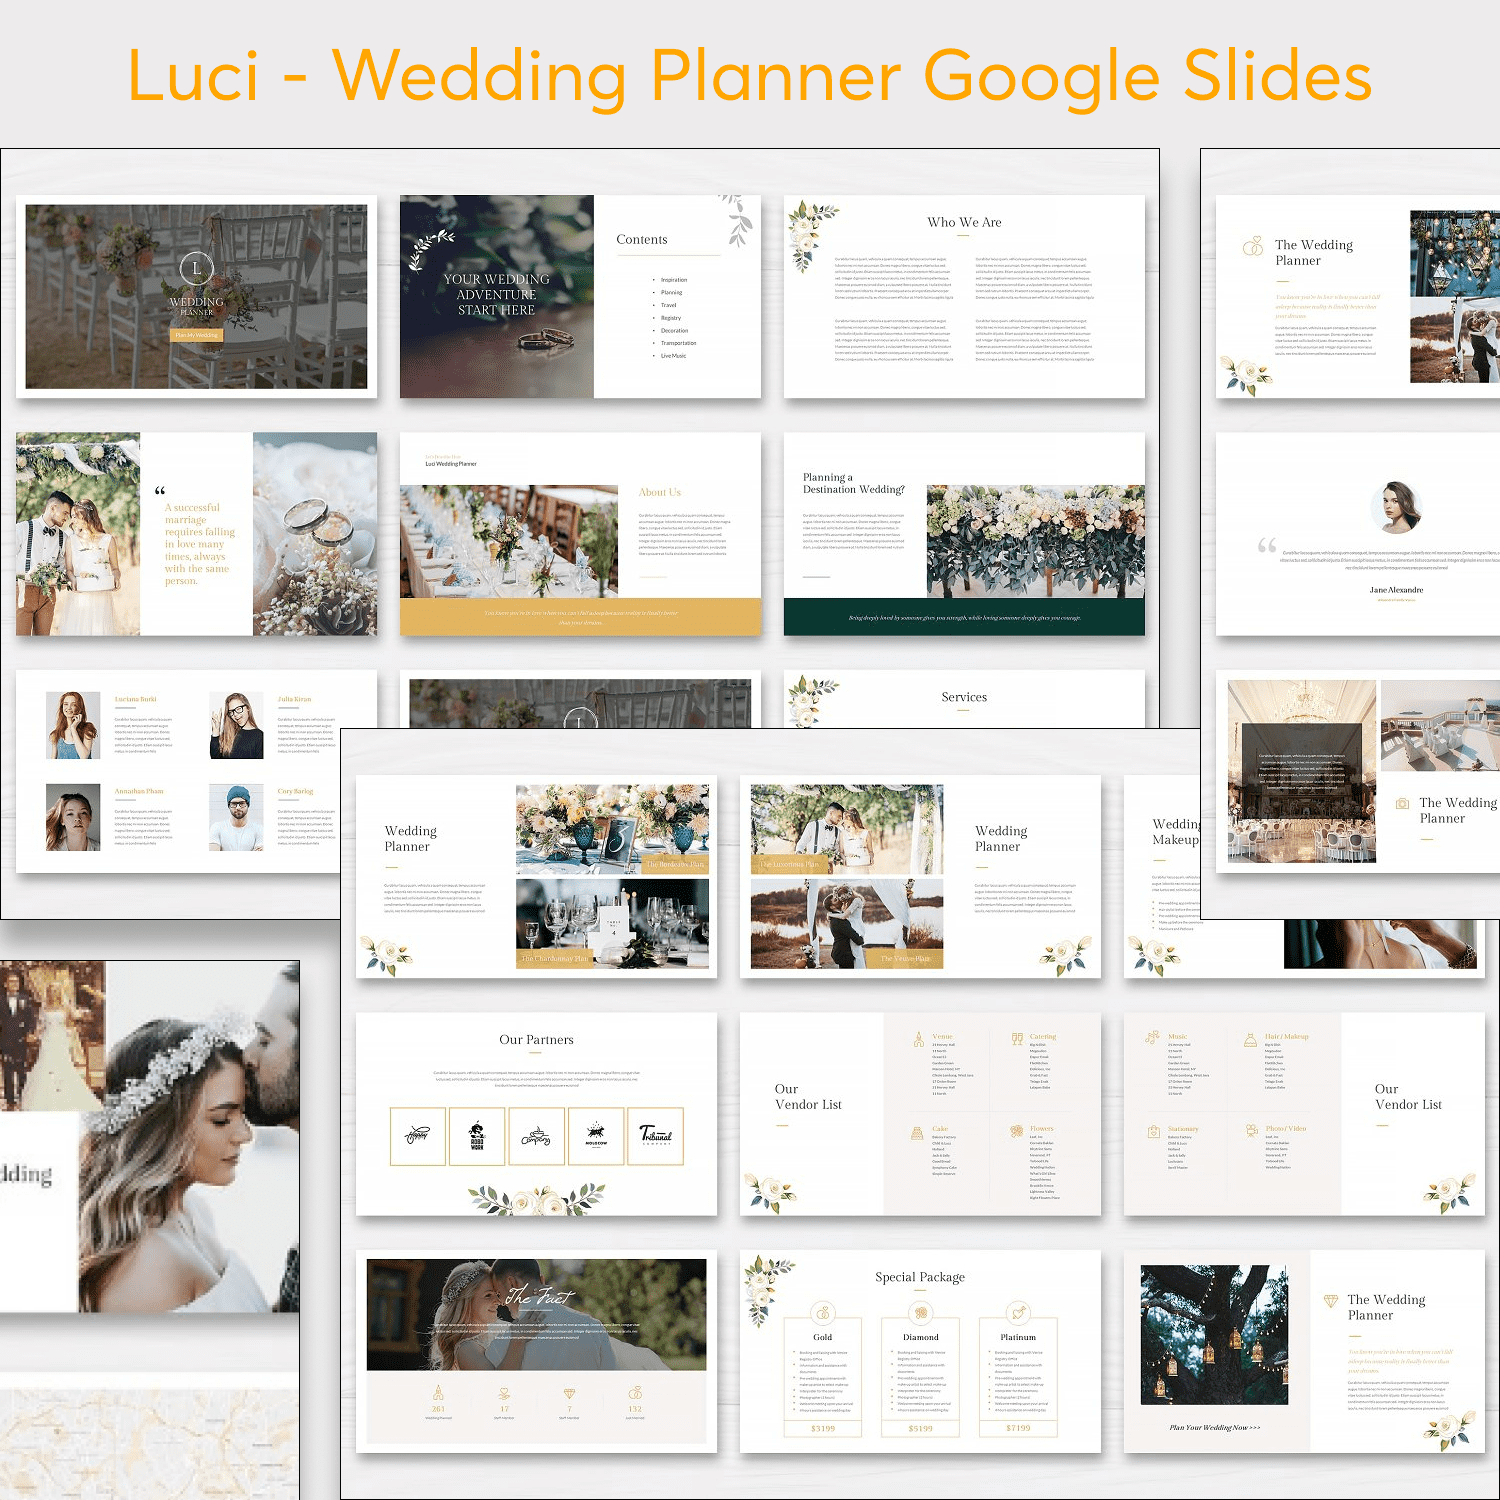 Luci - Wedding Planner Google Slides cover.